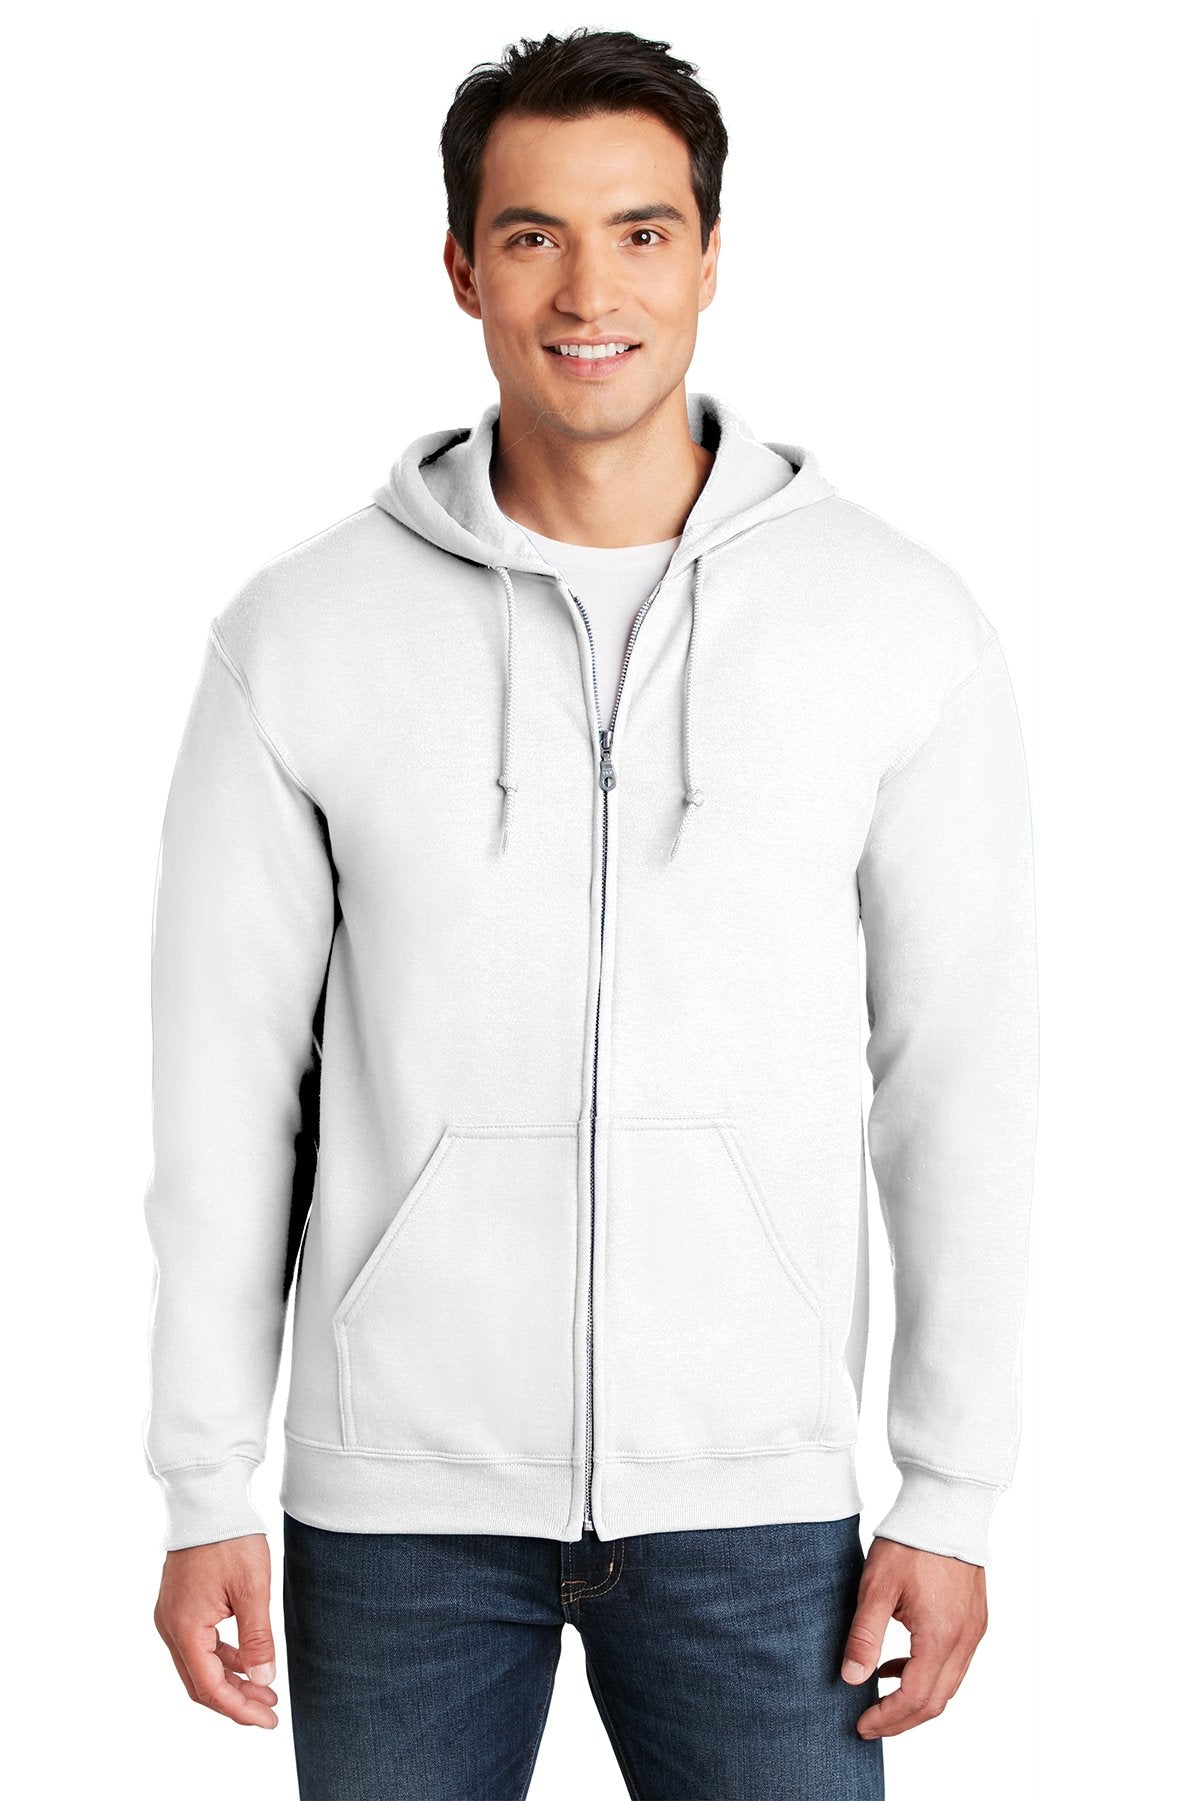 Gildan White 18600 custom embroidery sweatshirts